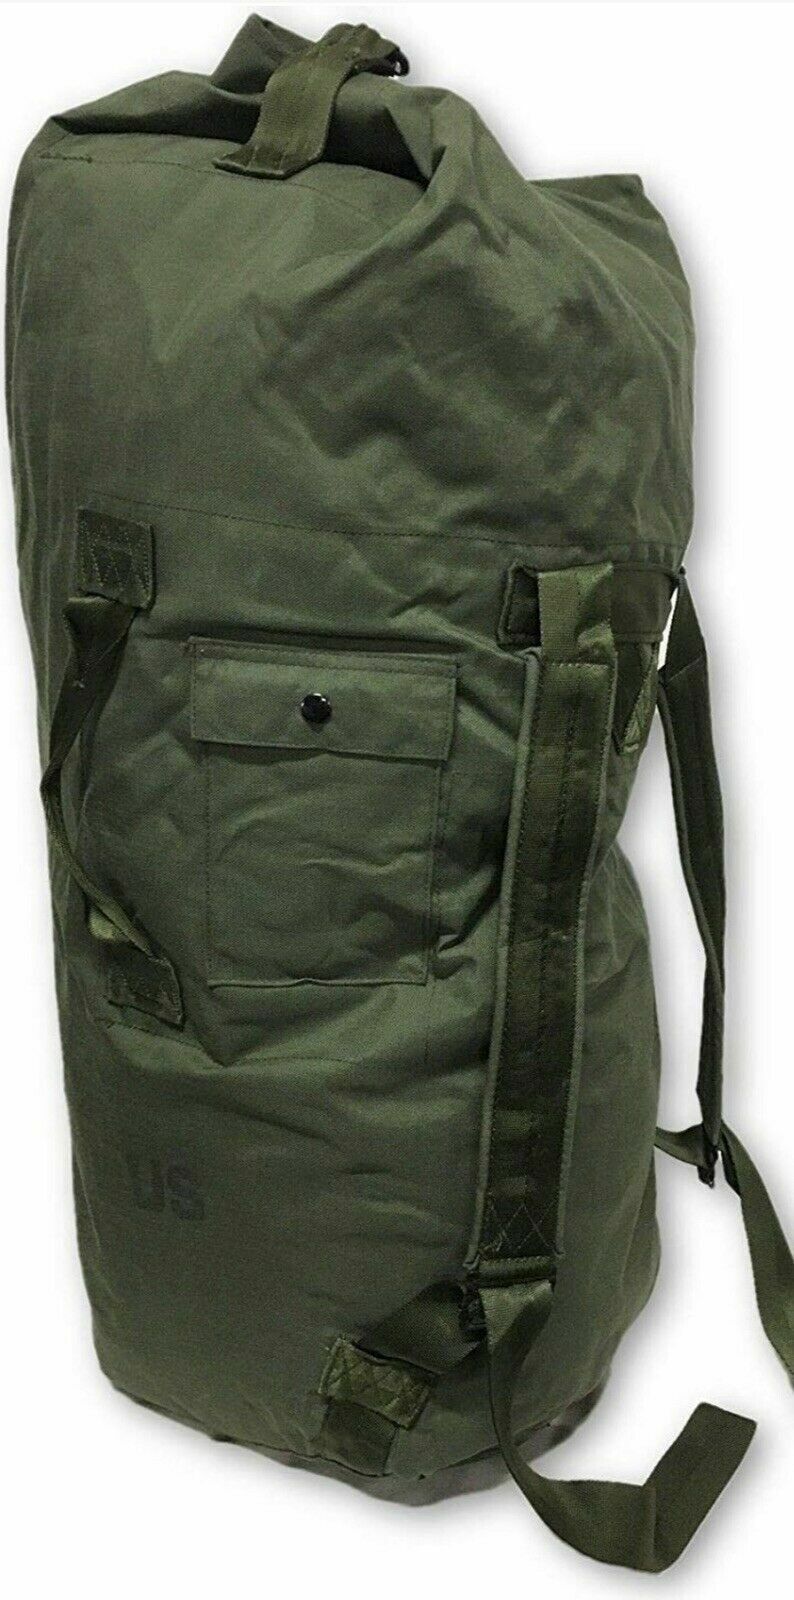 USGI Military/Army Duffel/Sea Bag Luggage Top Load 2 Strap OD Nylon- Excellent